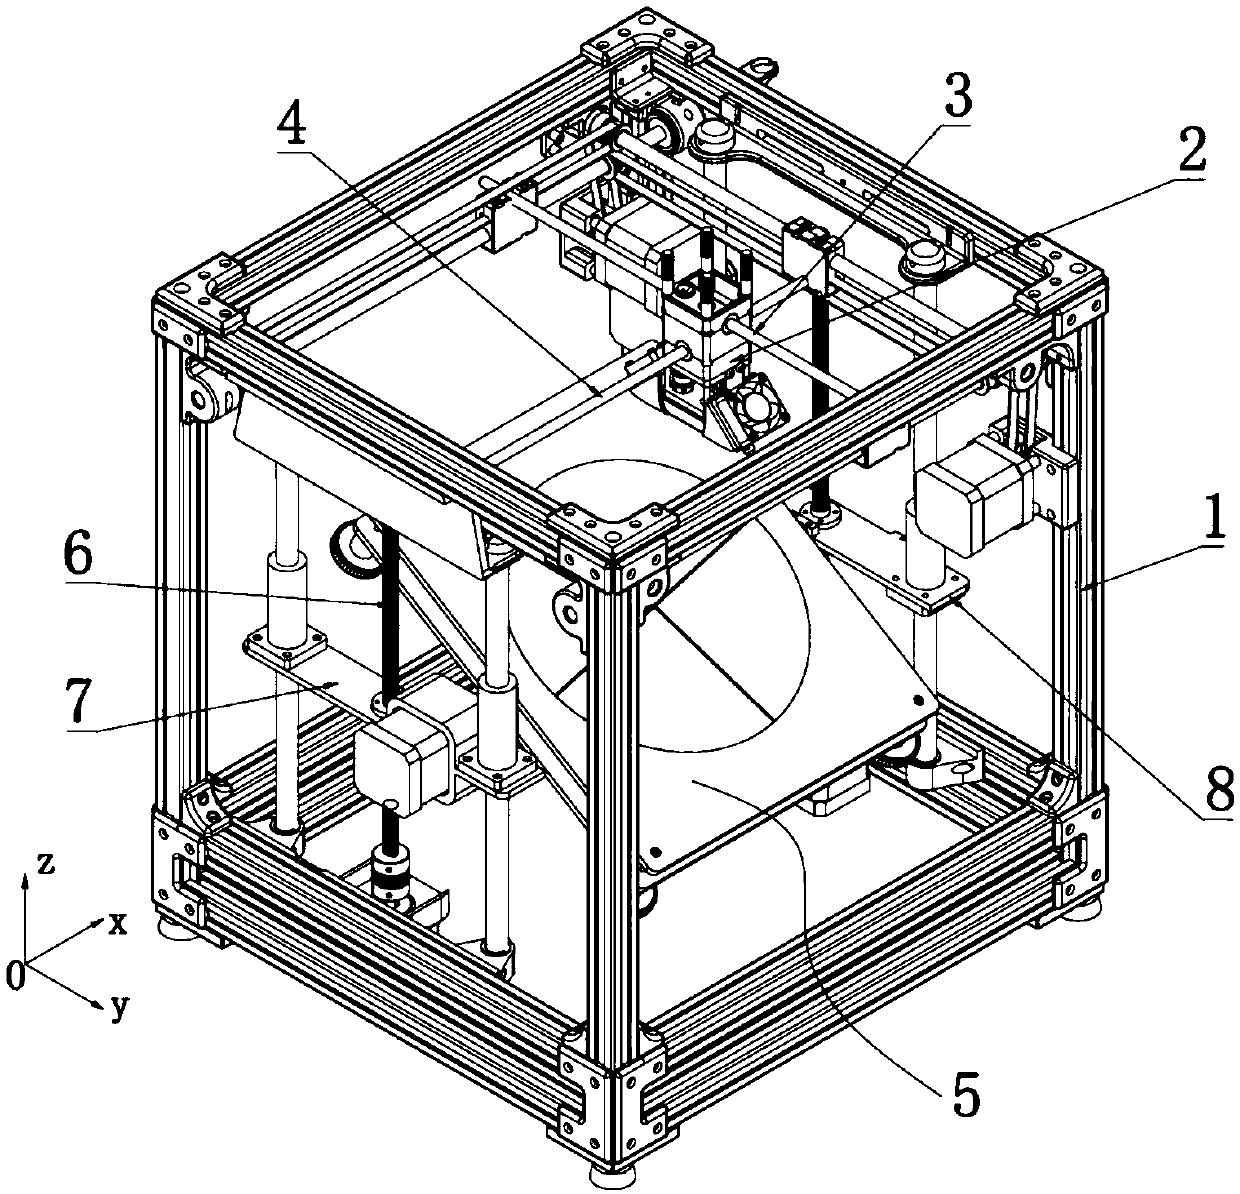 A dual-axis 3D printing platform